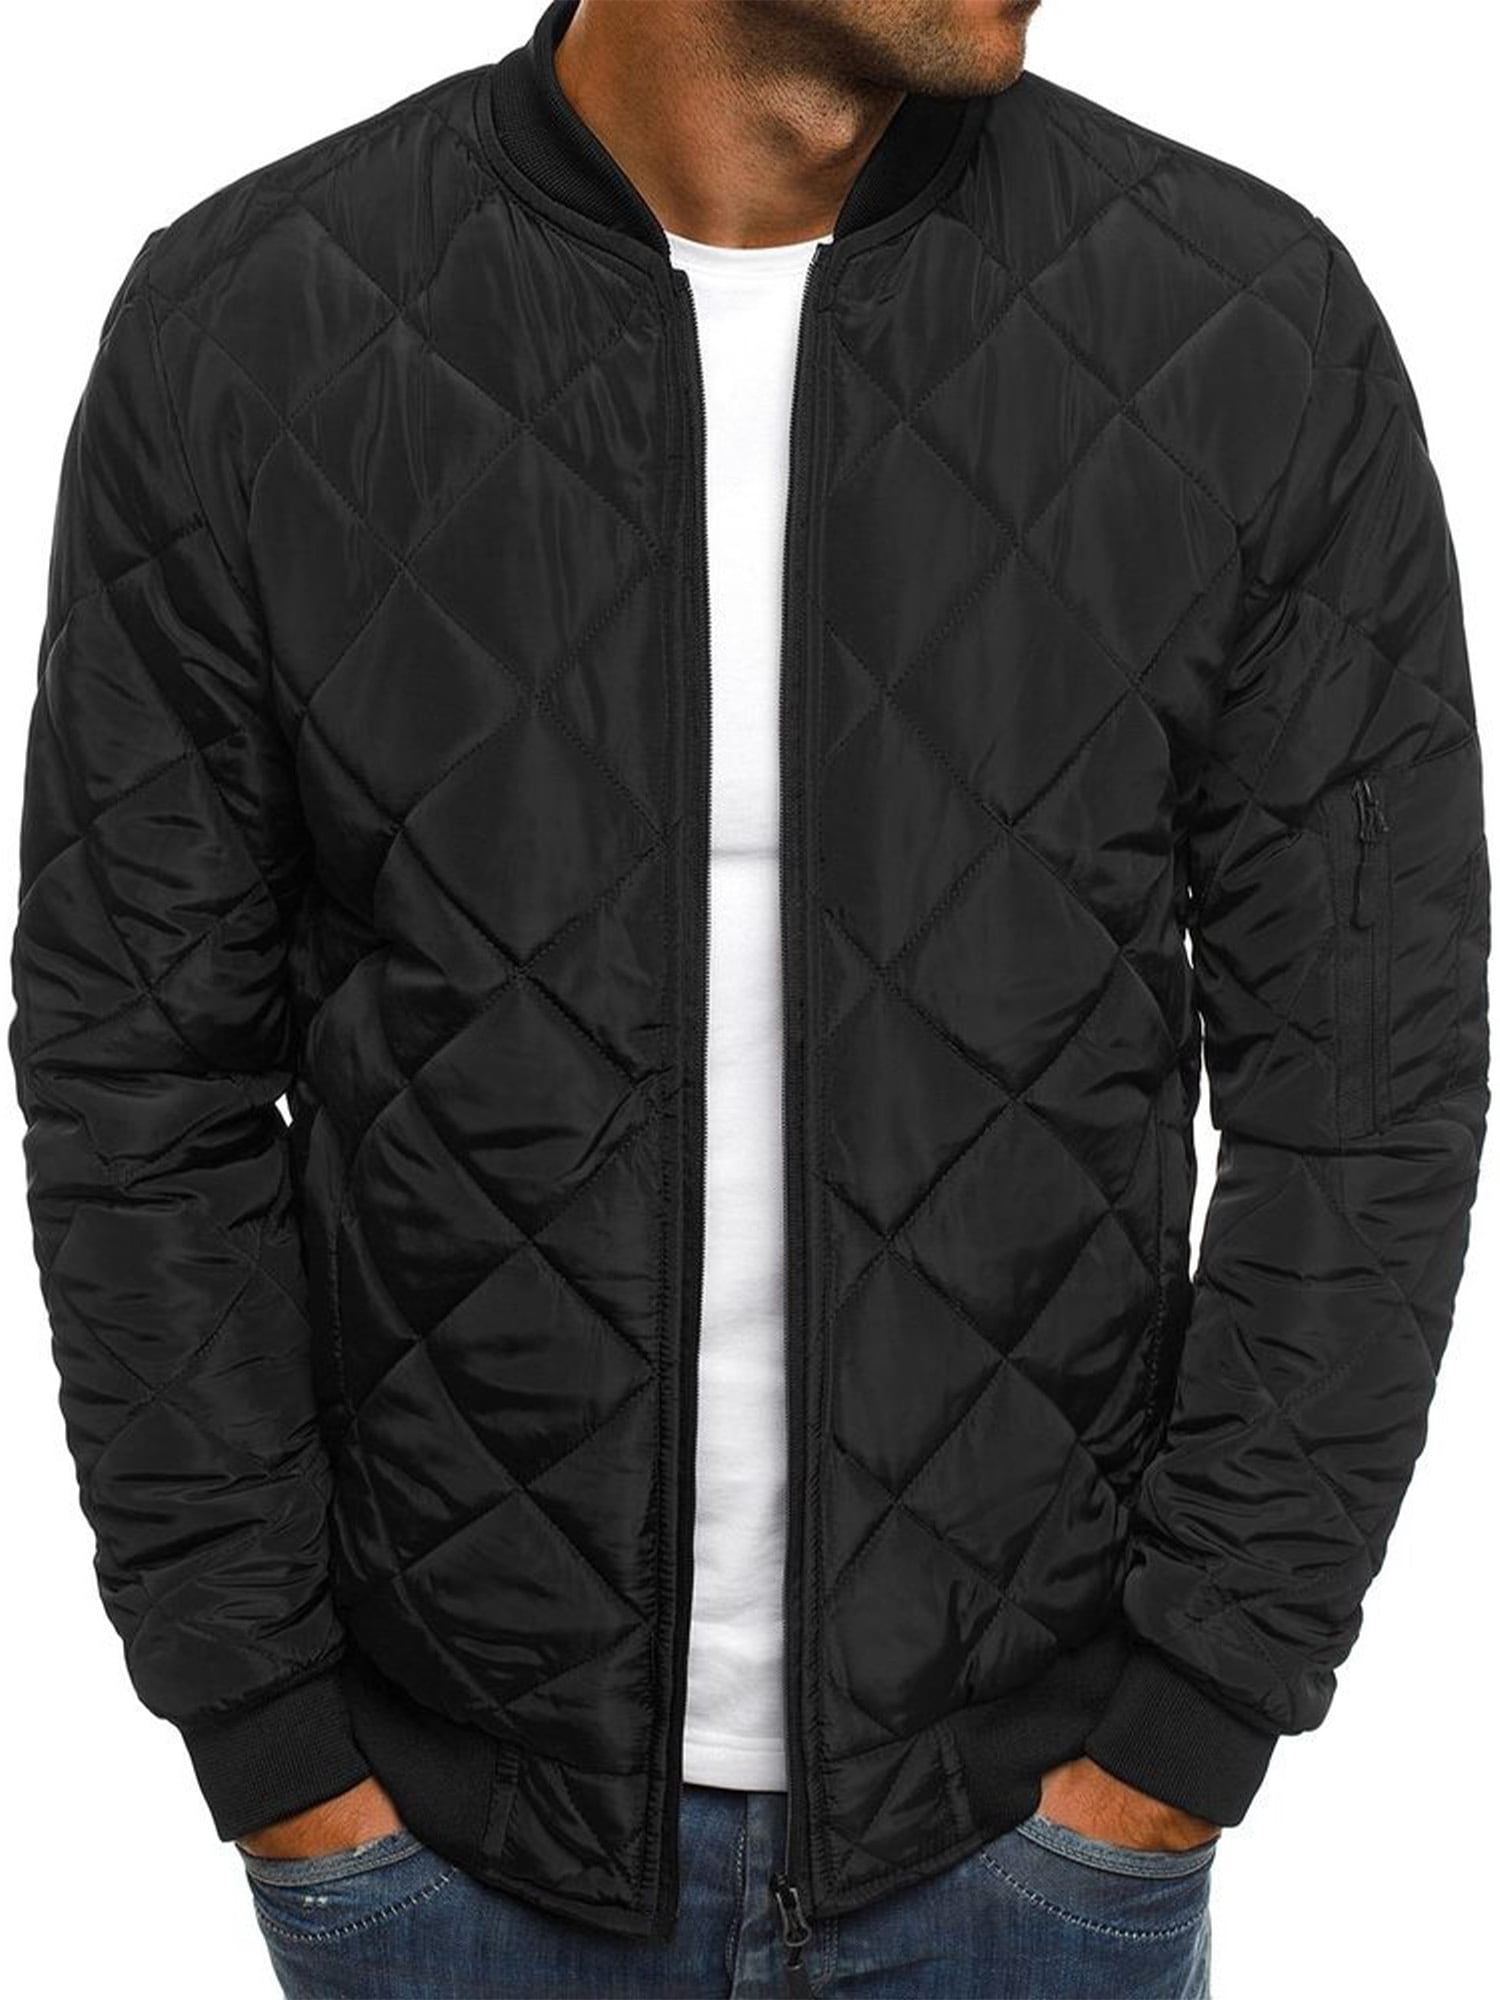 Casual Coat Zipper Outwear Long Sleeve Men New Baseball Slim Fit Jacket Overcoat